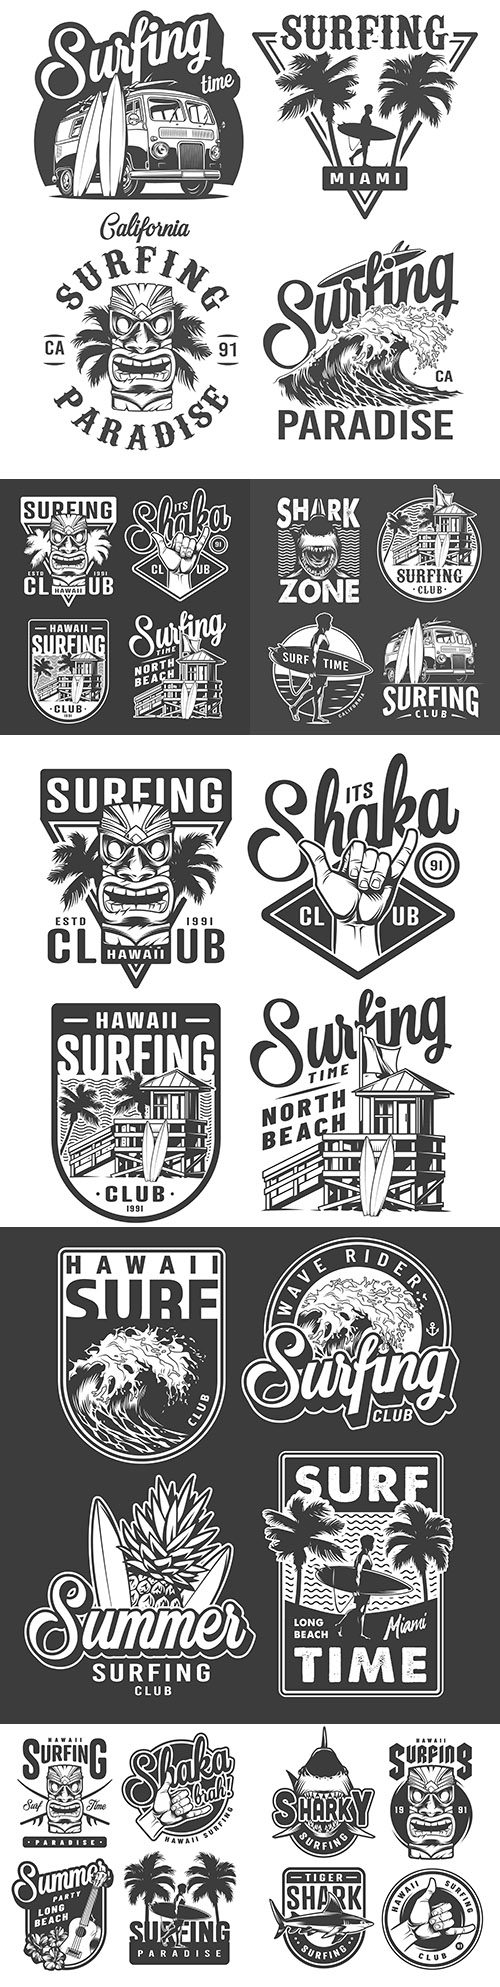 Monochrome vintage badges and surfing emblems
